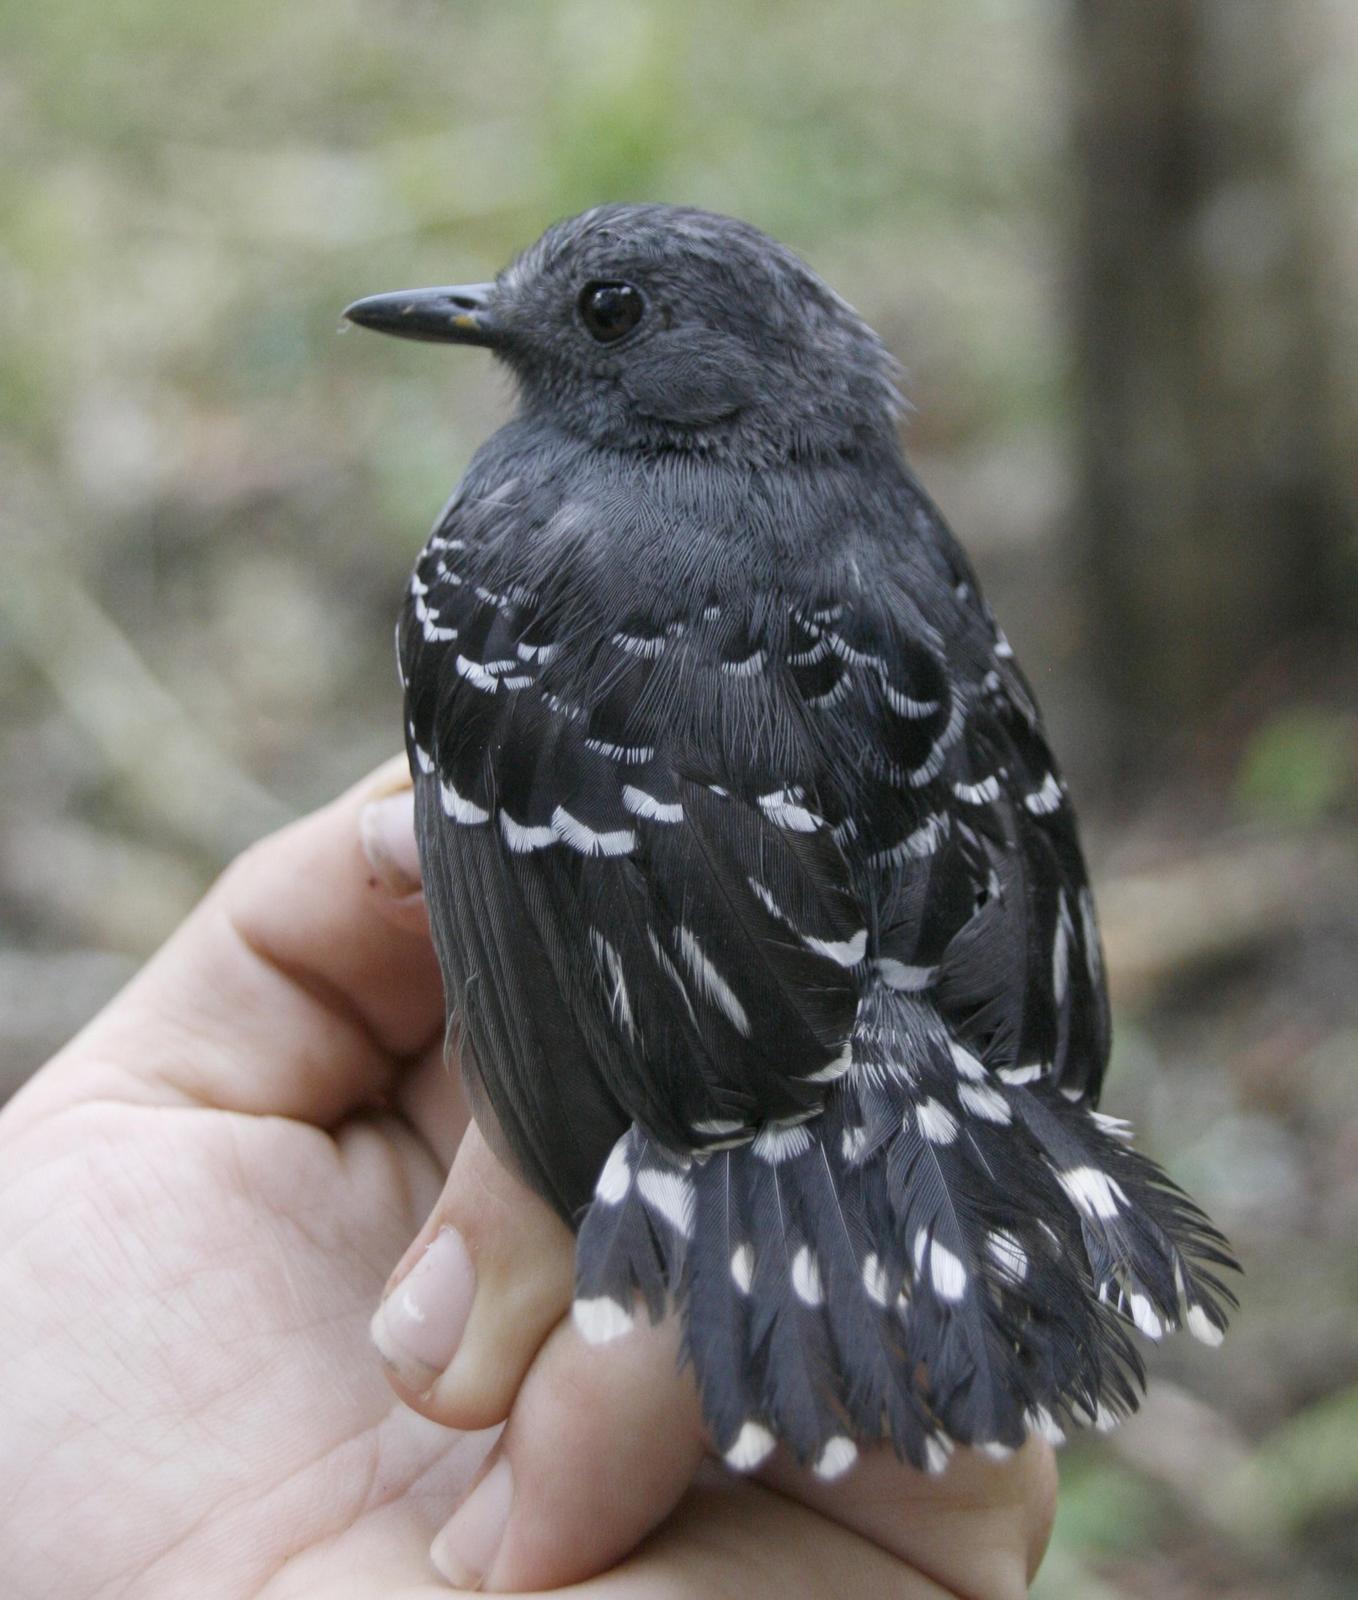 Common Scale-backed Antbird Photo by Oscar Johnson